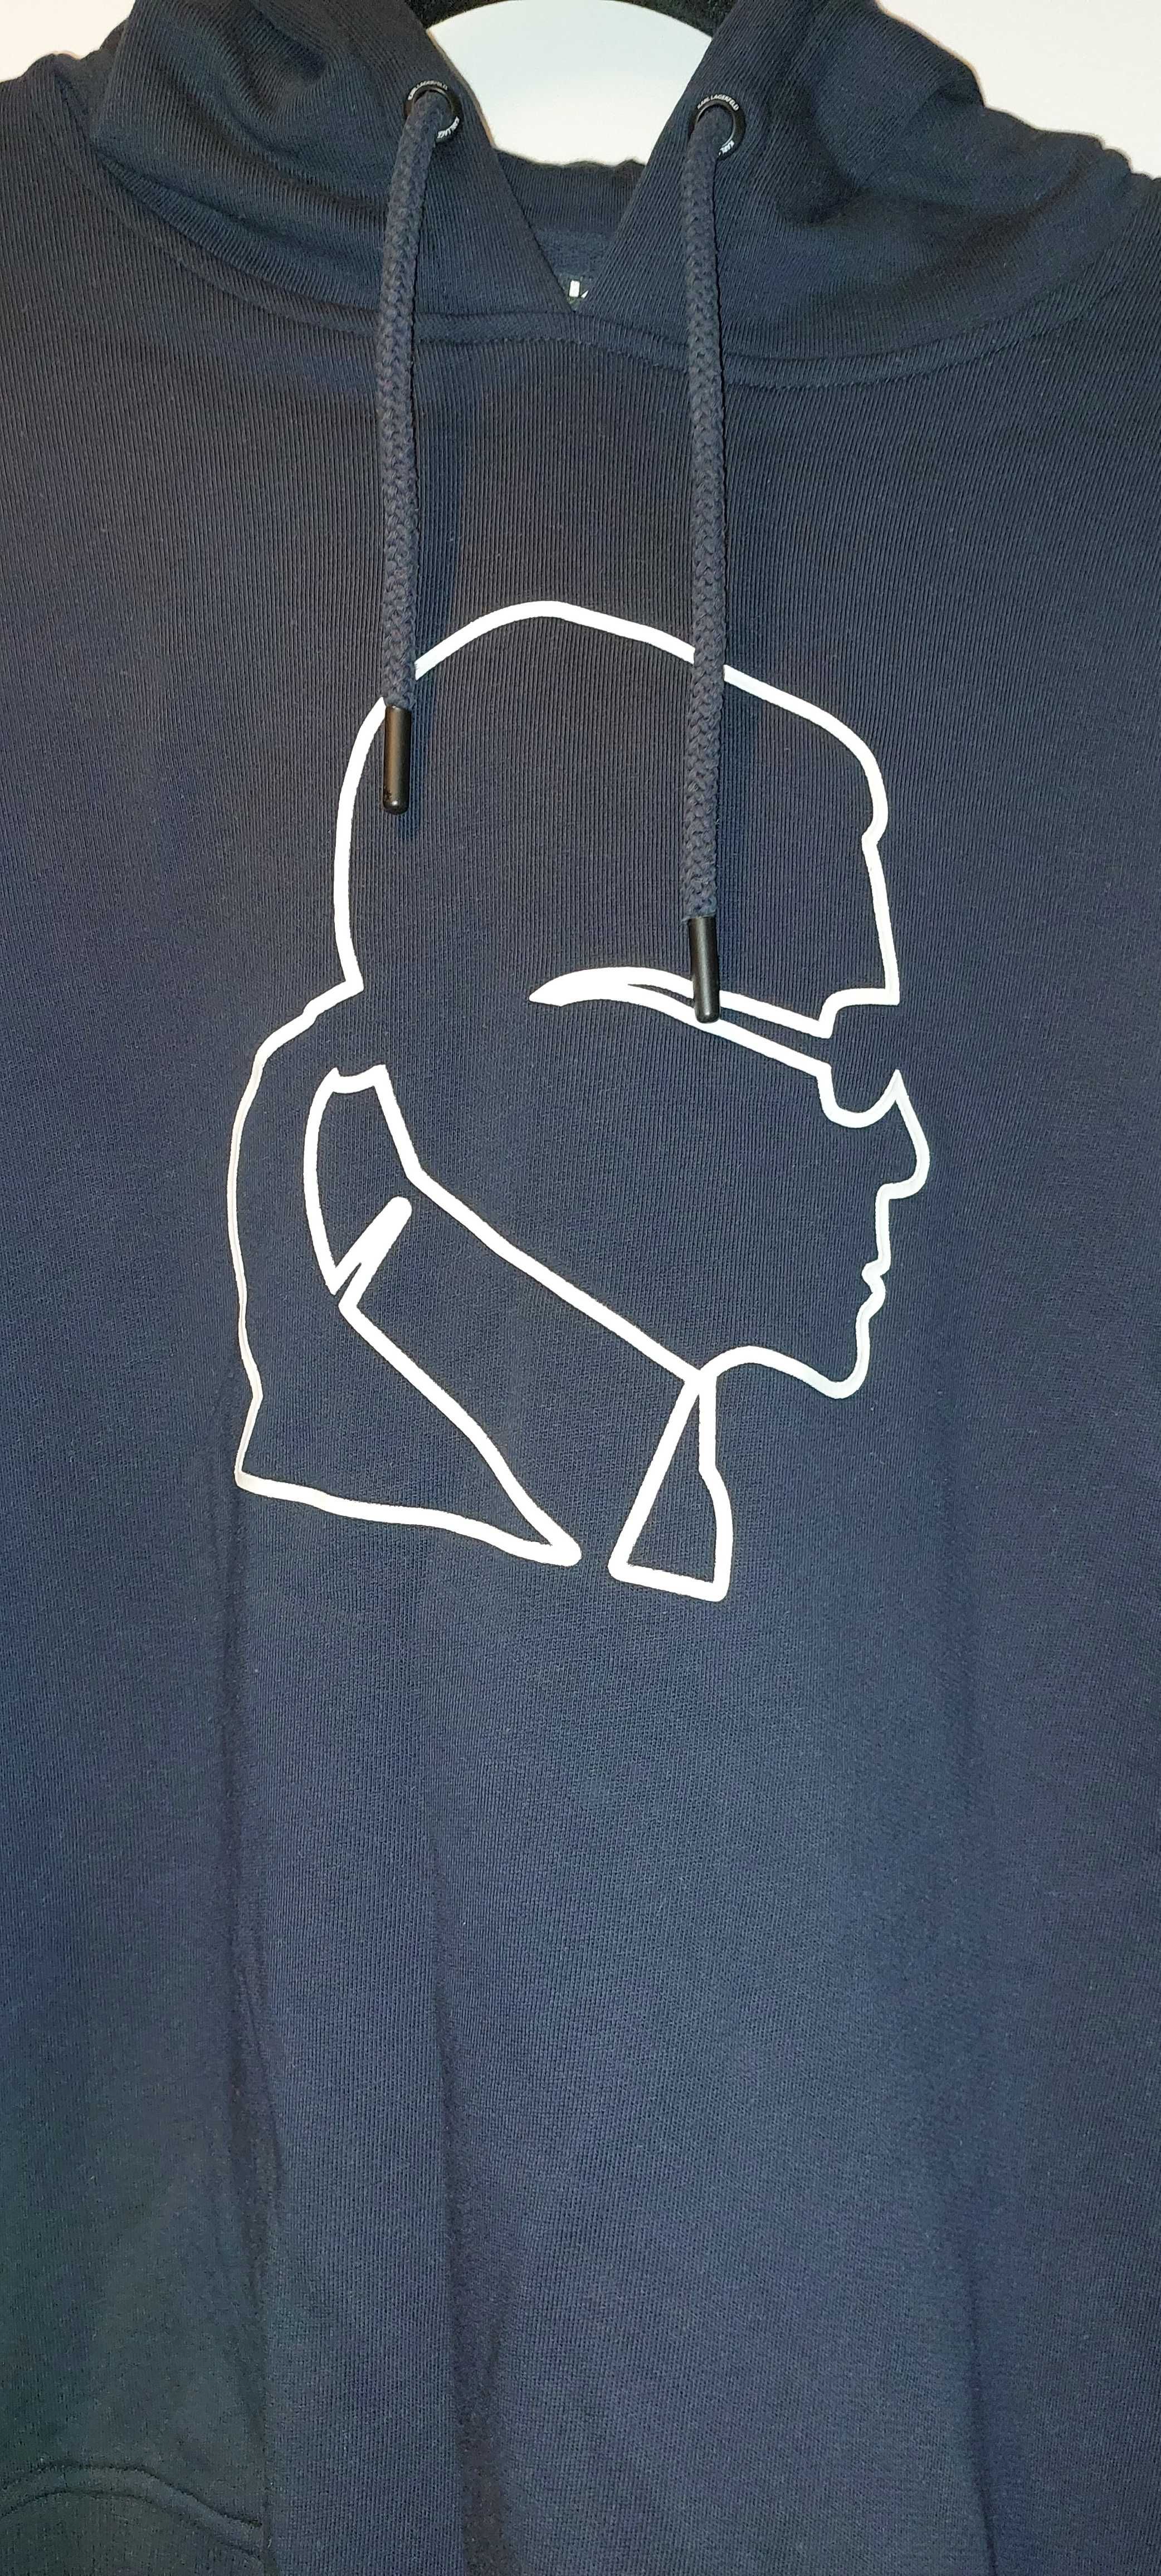 Bluza granatowa z kapturem Karl Lagerfeld XL/42